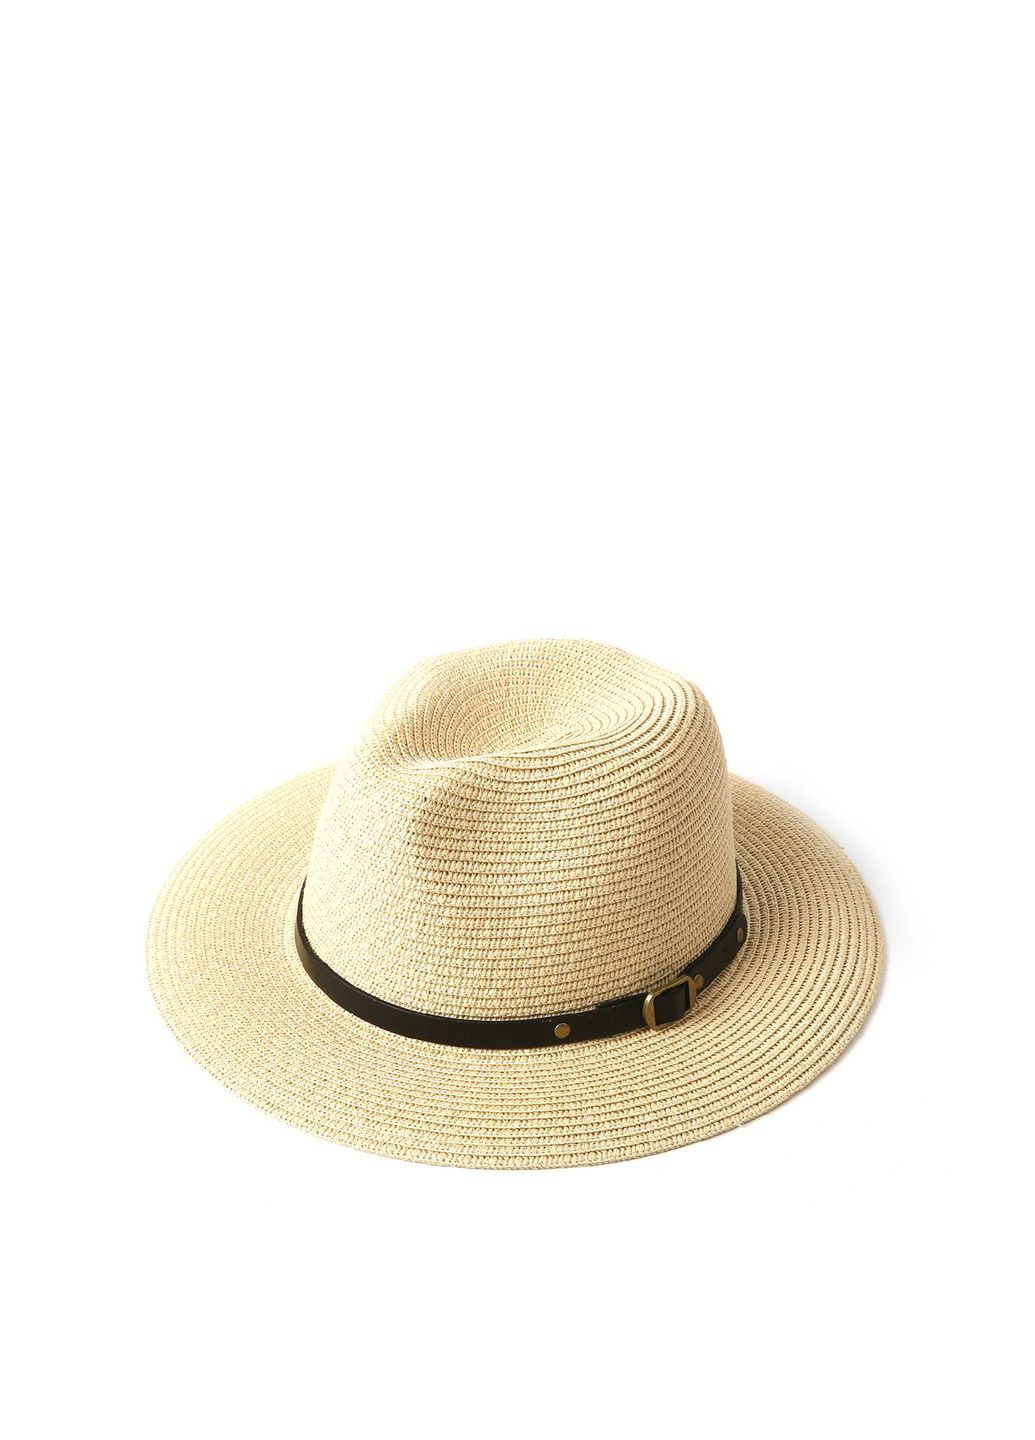 Шляпа федора женская бумага бежевая BRIDGET LuckyLOOK 844-064 (289478361)